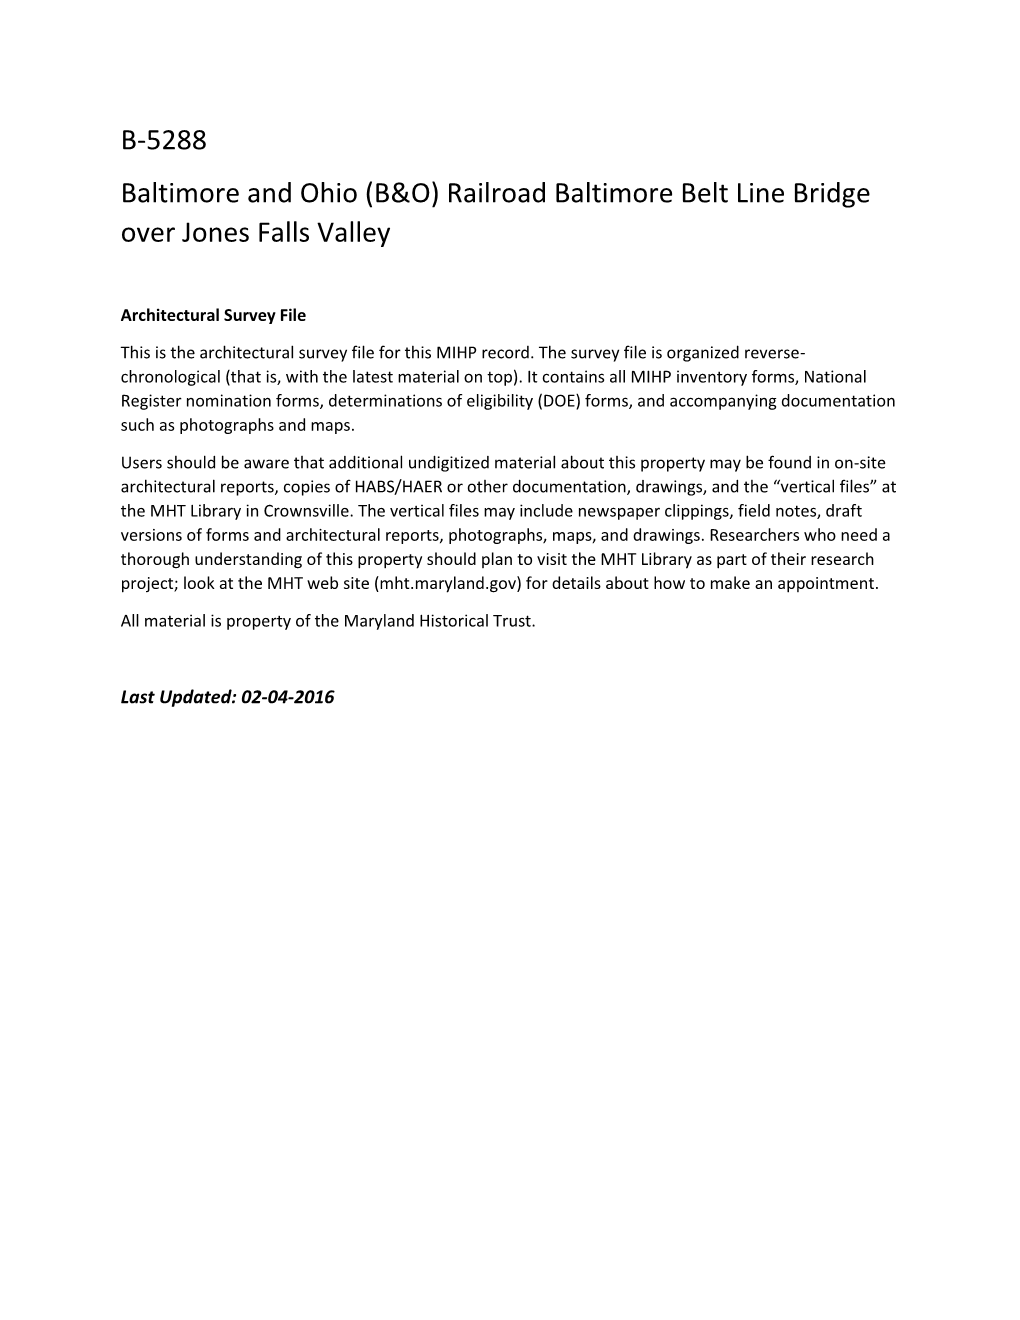 (B&O) Railroad Baltimore Belt Line Bridge